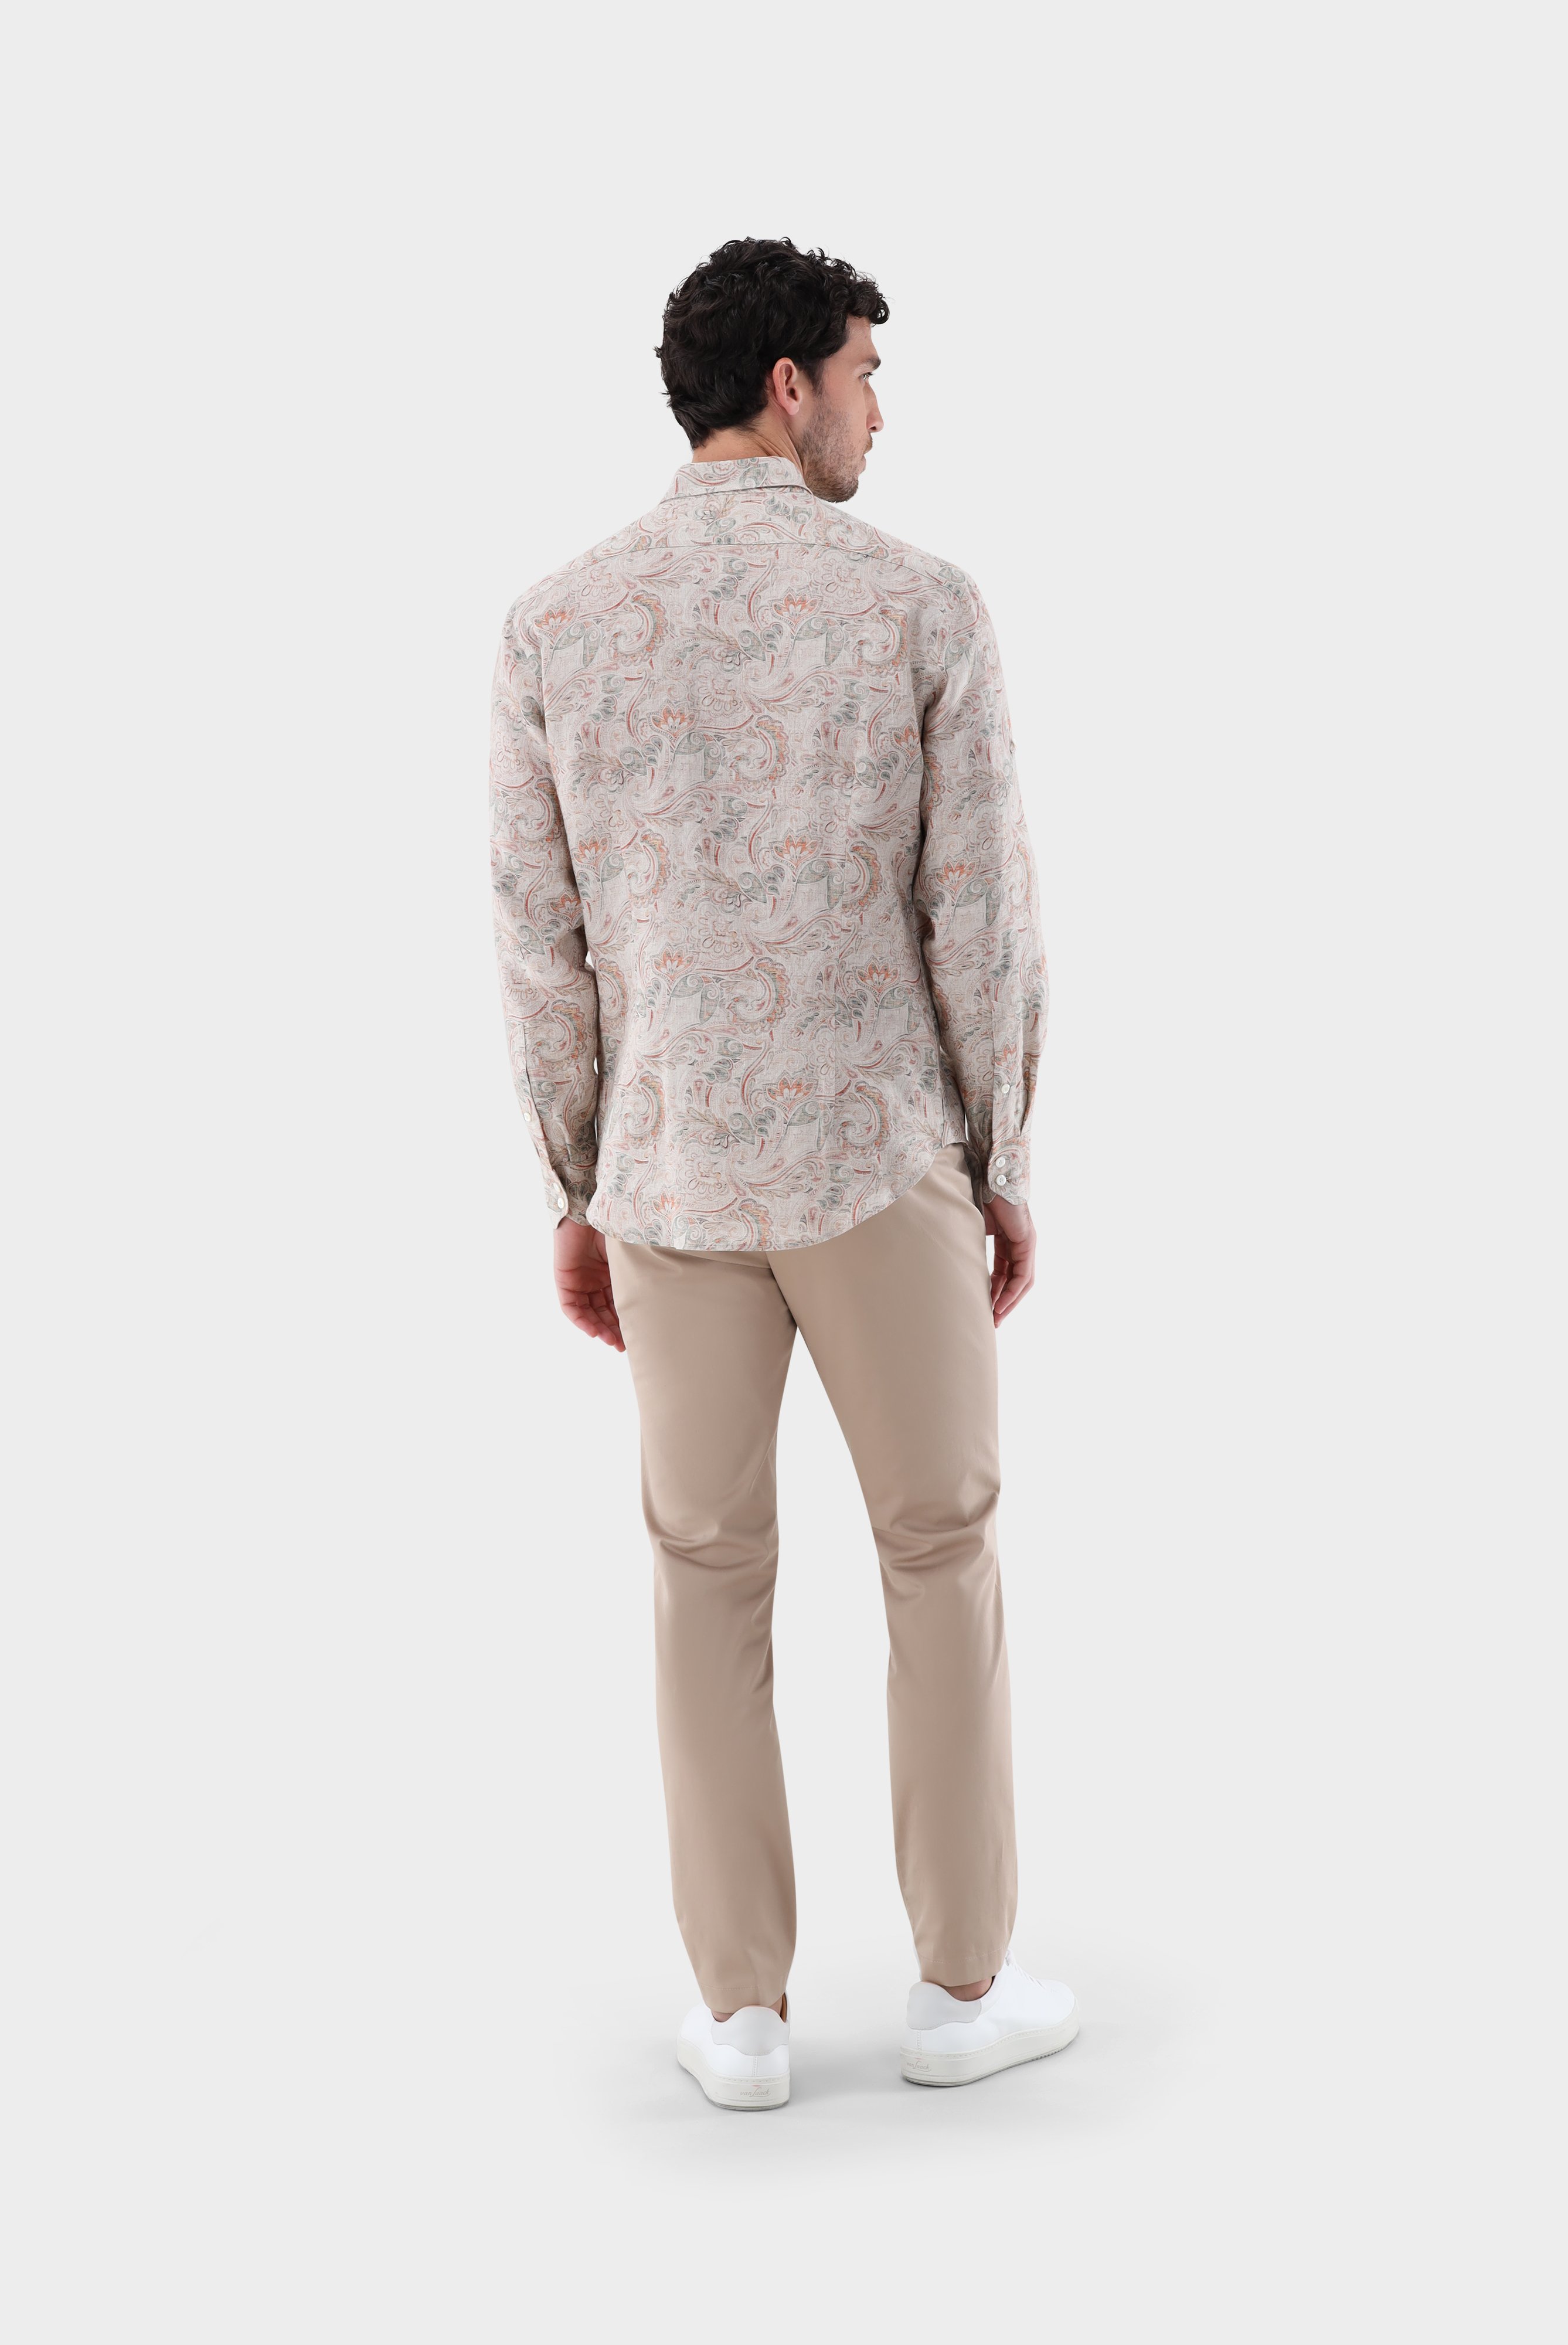 Casual Hemden+Leinenhemd mit Paisley-Druck Tailor Fit+20.2013.C4.172036.113.38